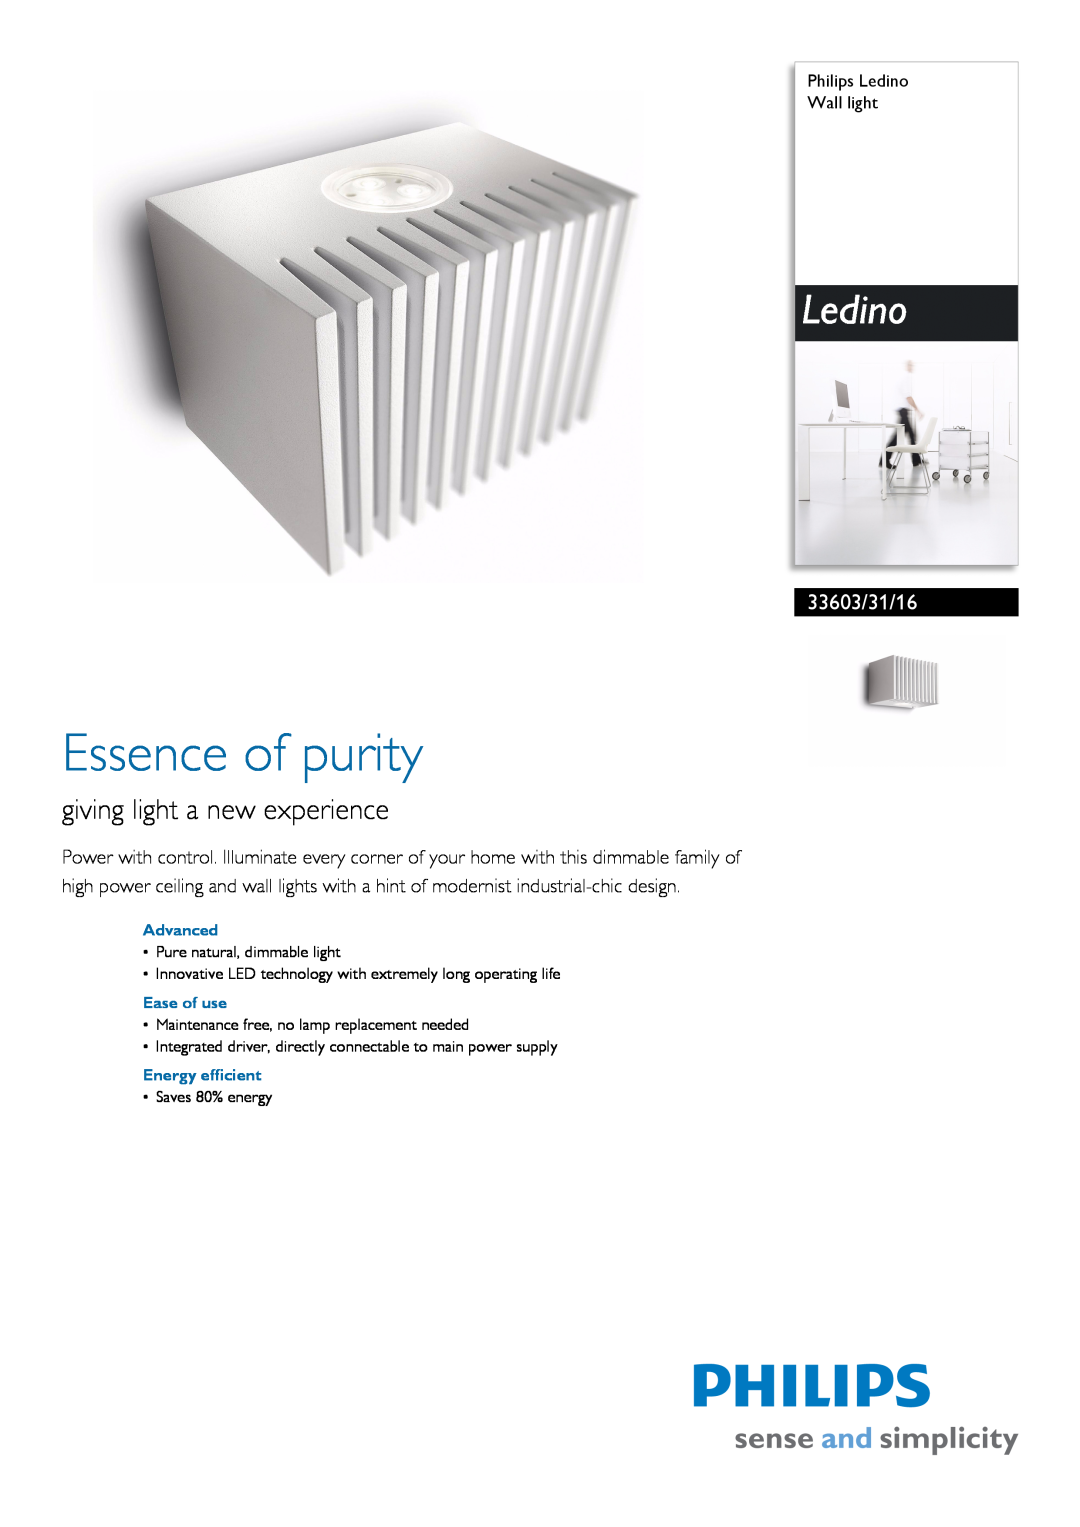 Philips 33603/31/16 manual Philips Ledino Wall light, Advanced, Ease of use, Energy efficient, Essence of purity 